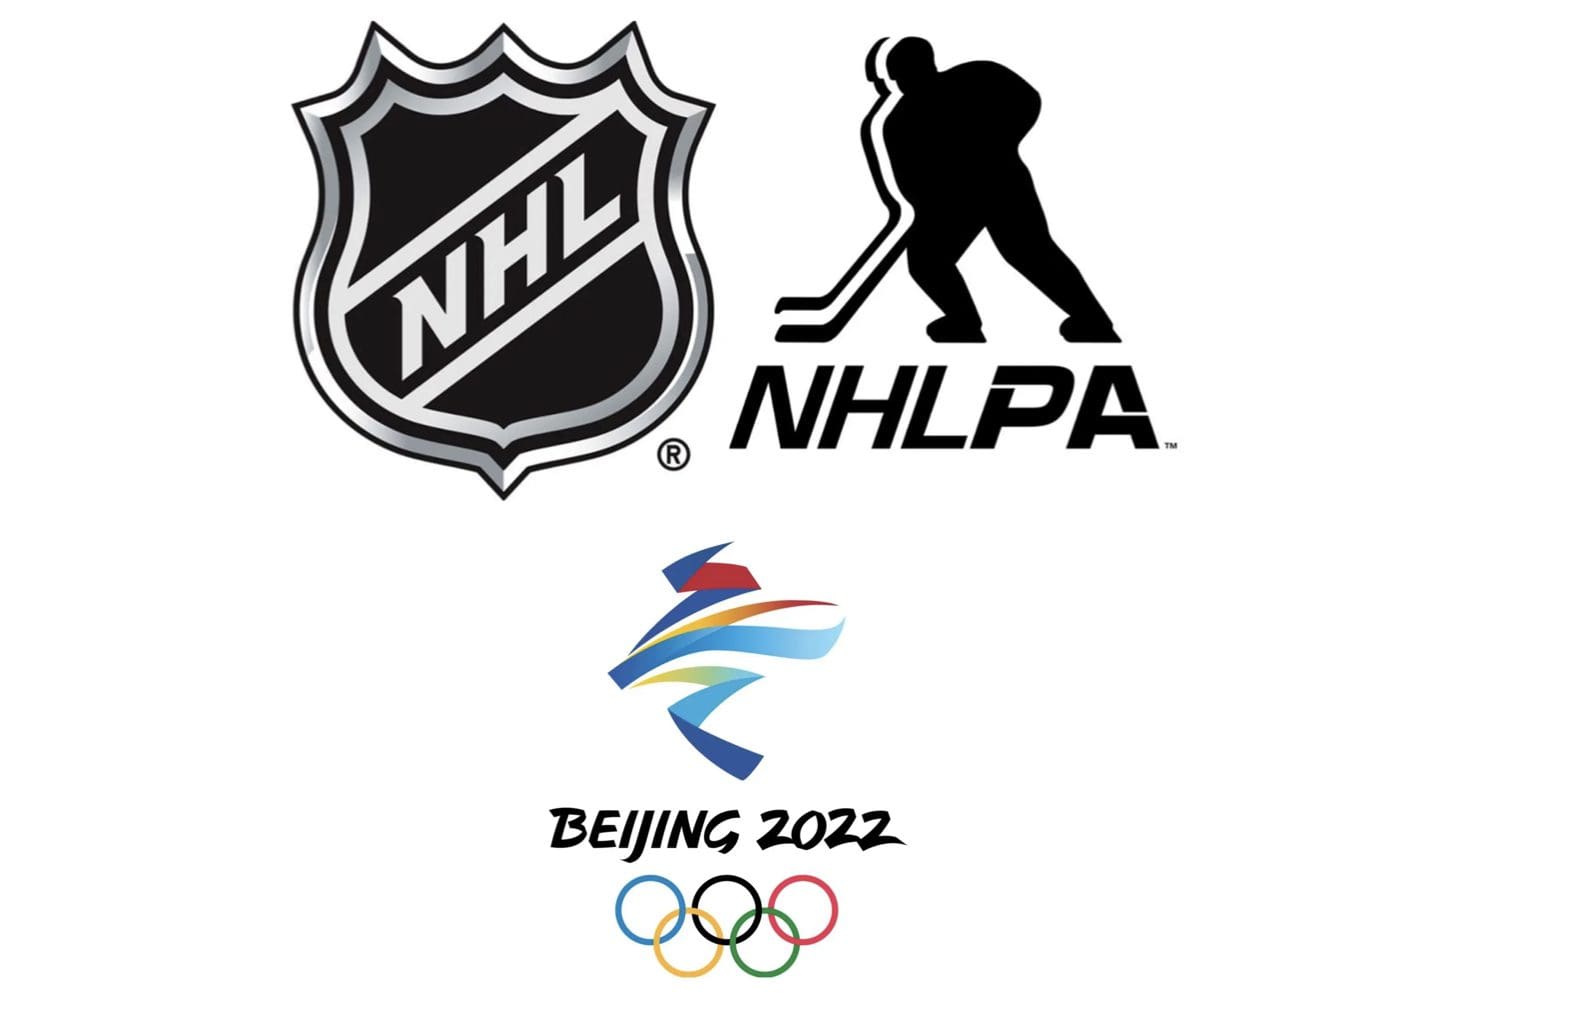 NHL, NHLPA, Olympics 2022 Logos